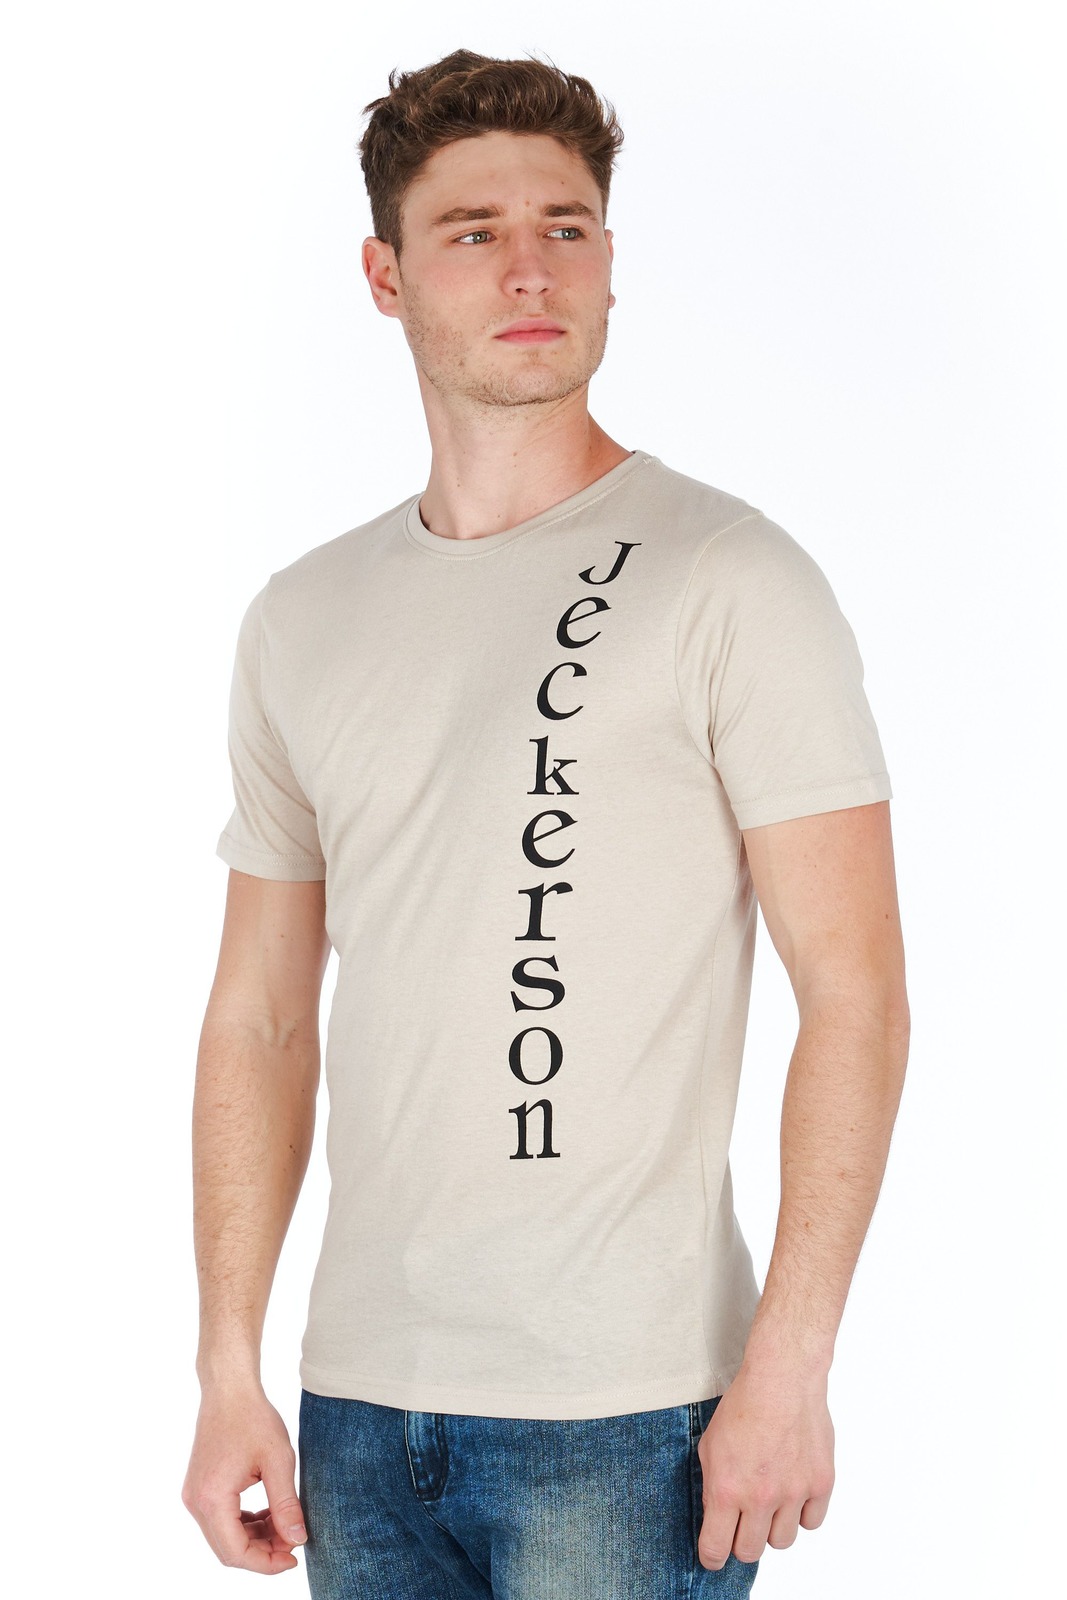 Jeckerson Grey T-shirts for Men - LOGO